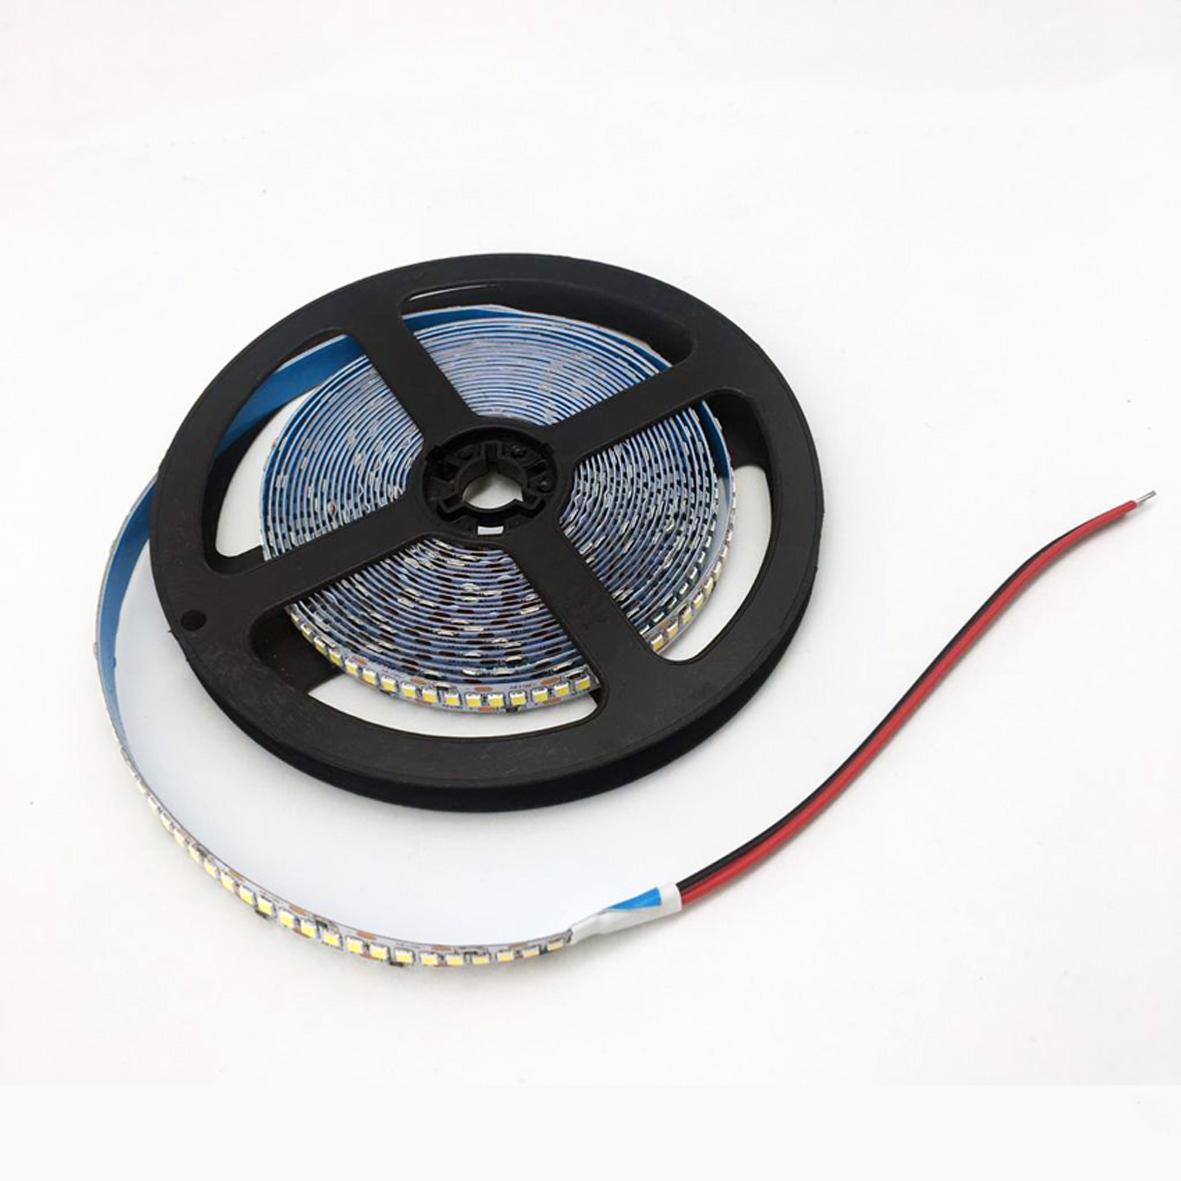 Ruban LED 5m pour les professionnels - 10mm - IP65 - Visioled